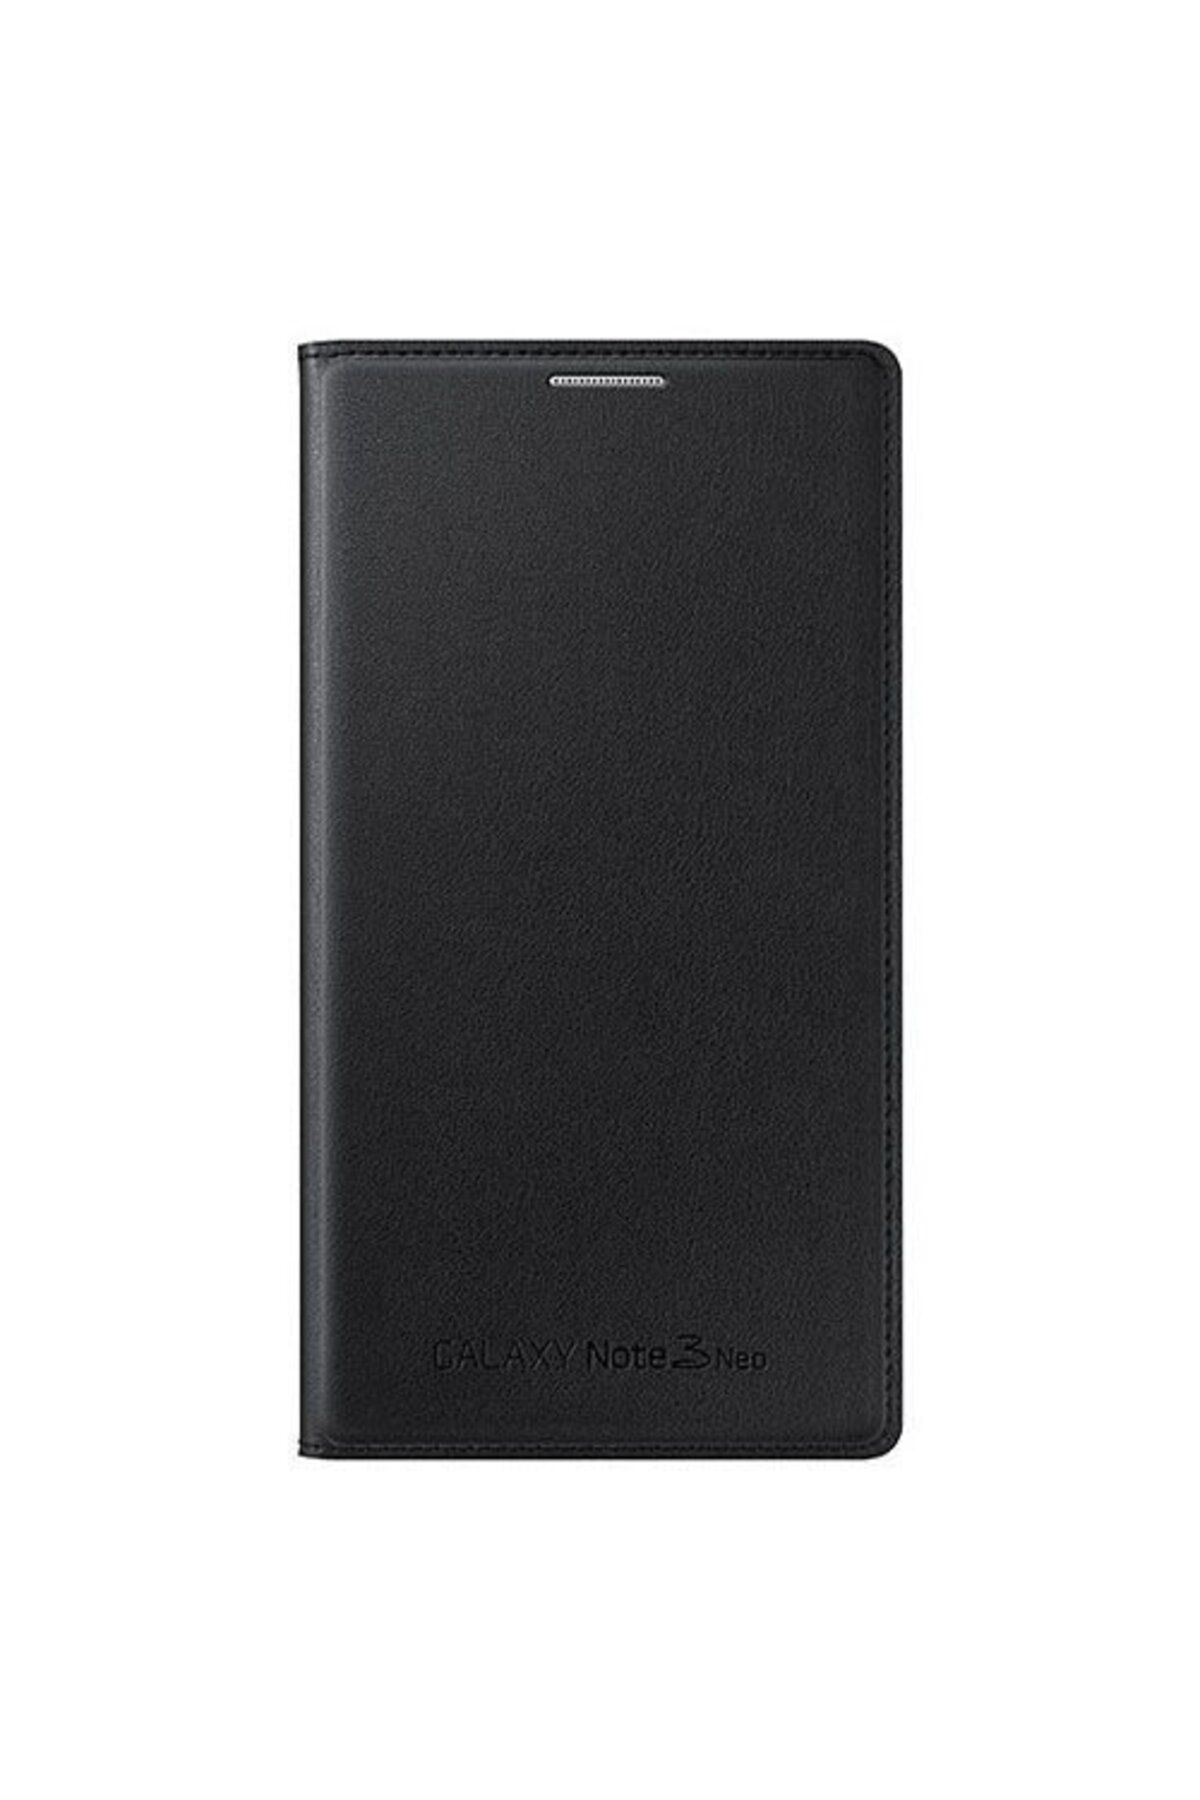 Samsung Galaxy Note 3 Neo Kılıf Flip Wallet Siyah Ef-wn750b